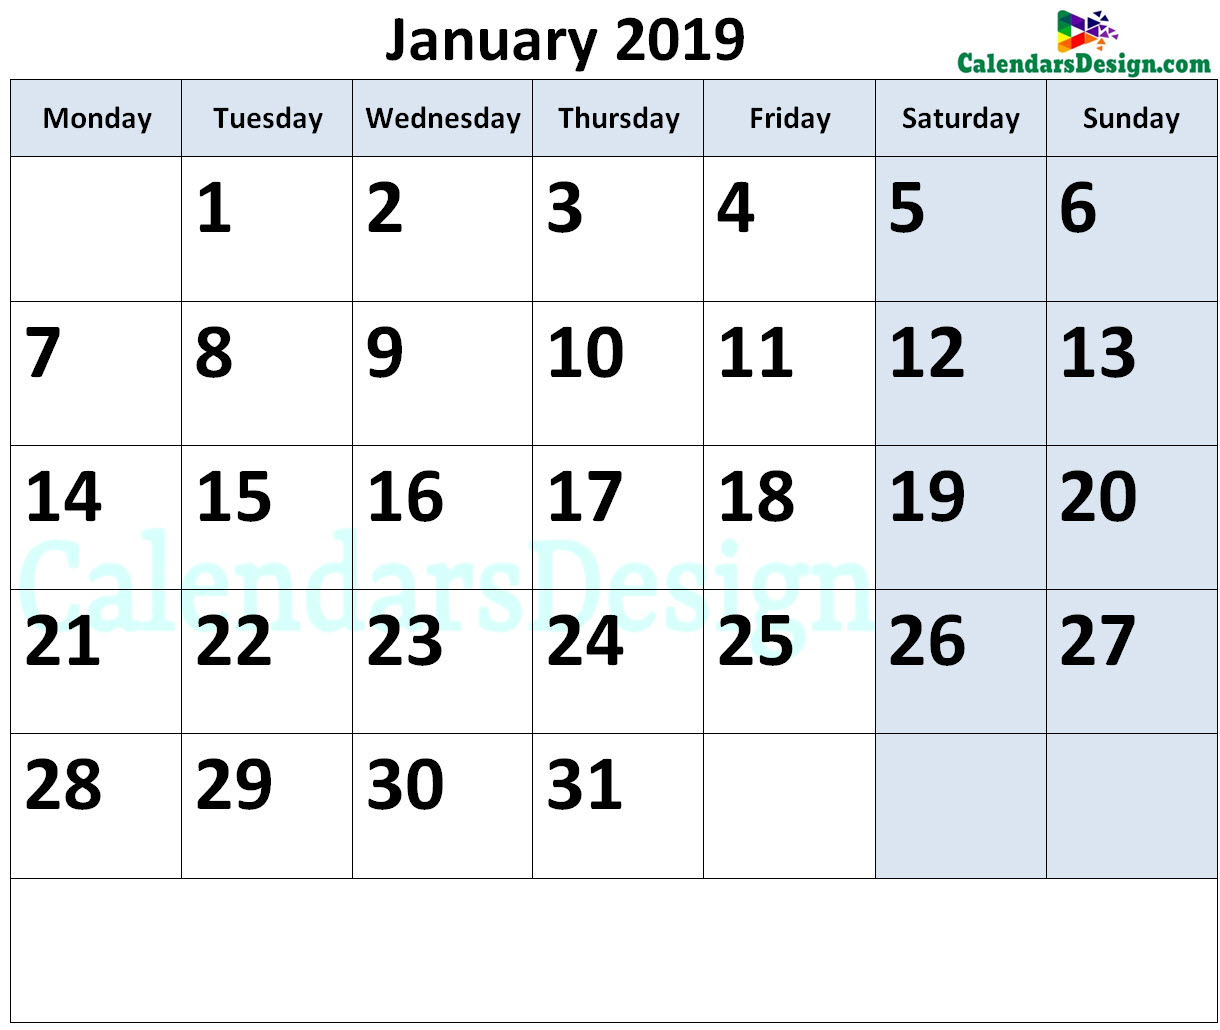 January 2019 Calendar Page